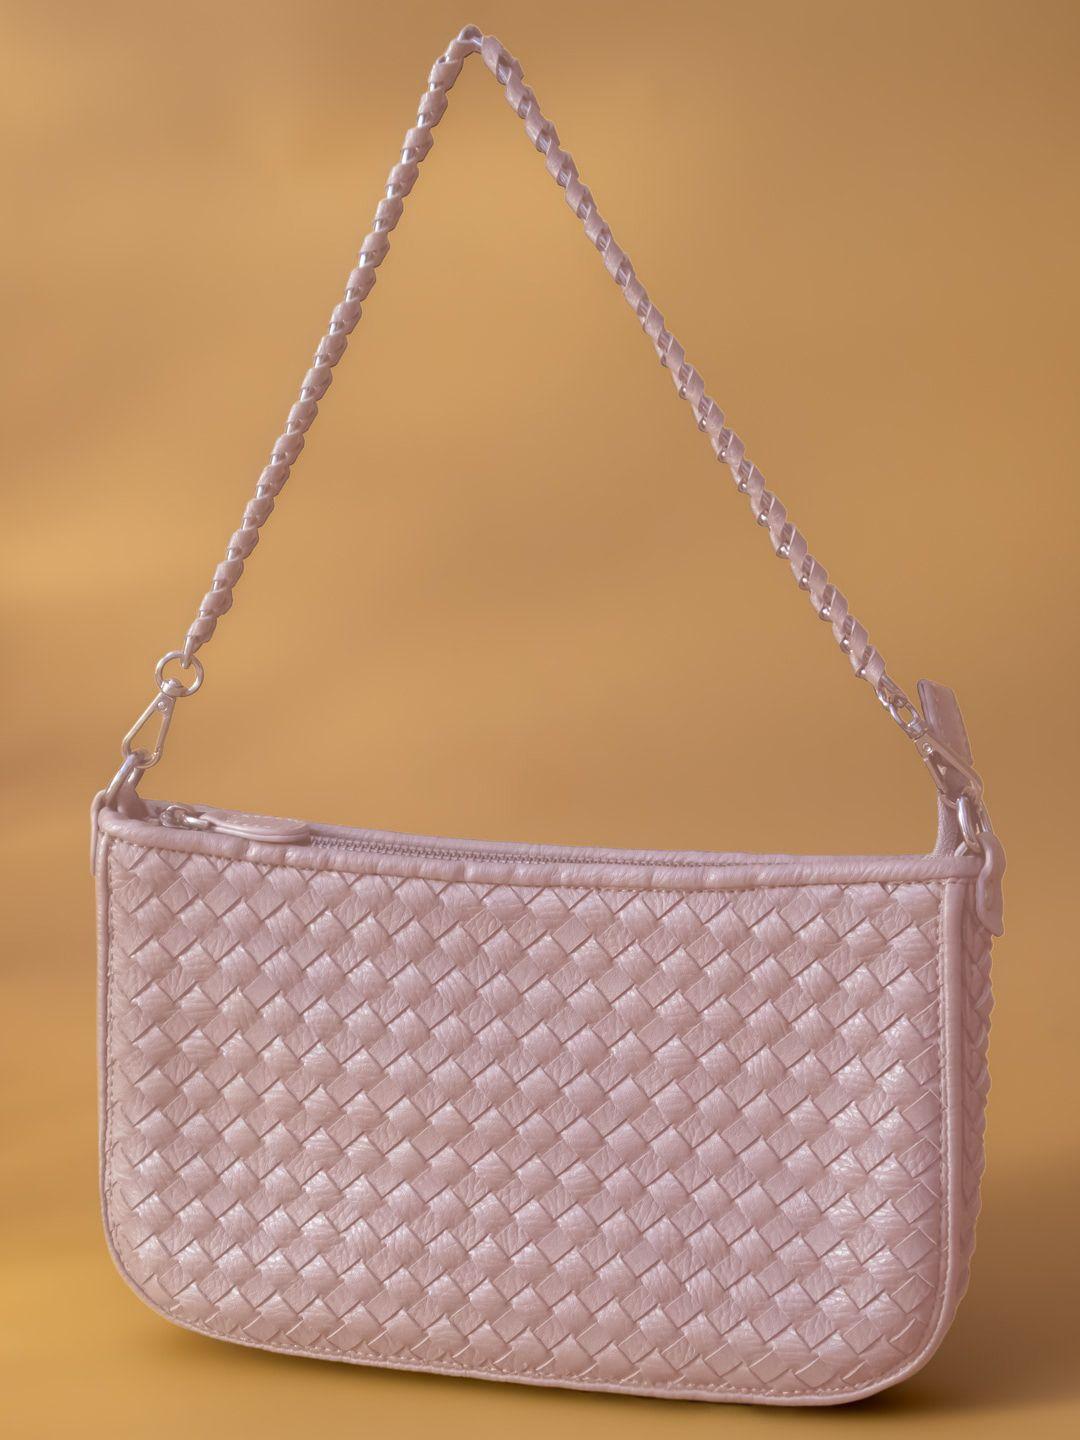 inc 5 textured structured sling bag